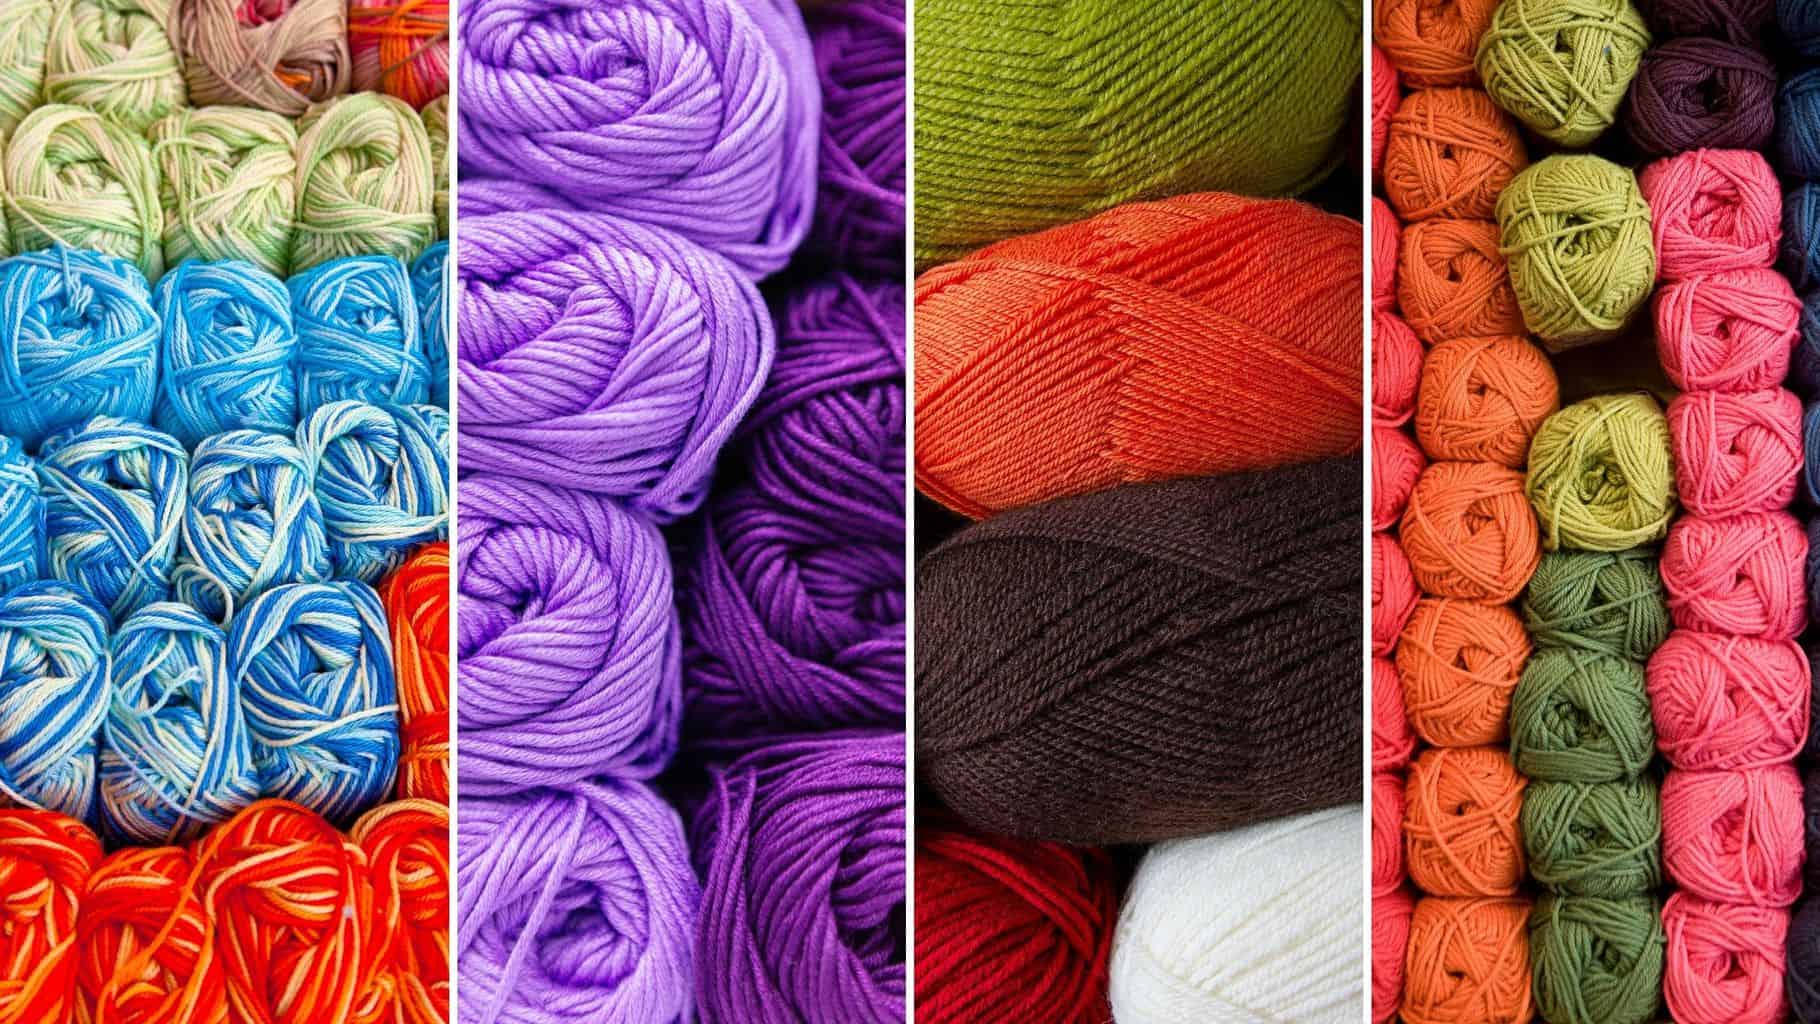 Best Black Friday Deals for Crocheters & Knitters - Easy Crochet Patterns